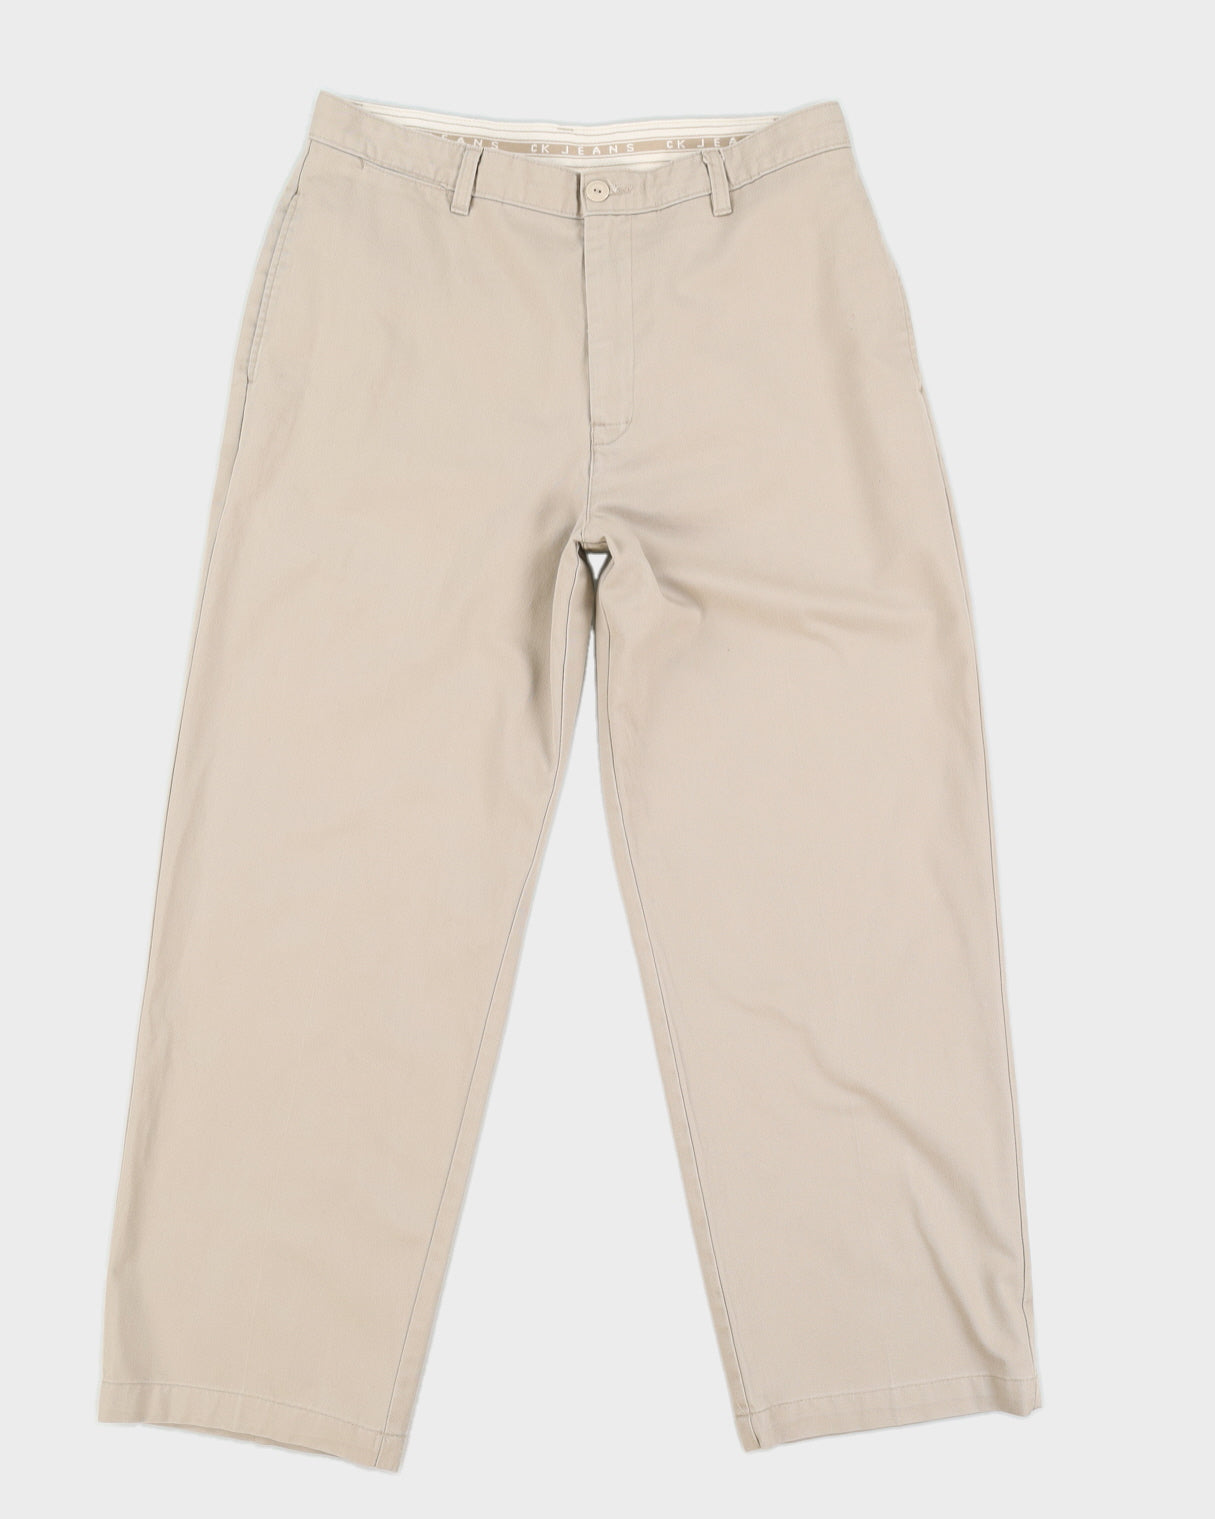 Vintage 90s Calvin Klein Jeans Beige Trousers - W34 L 29